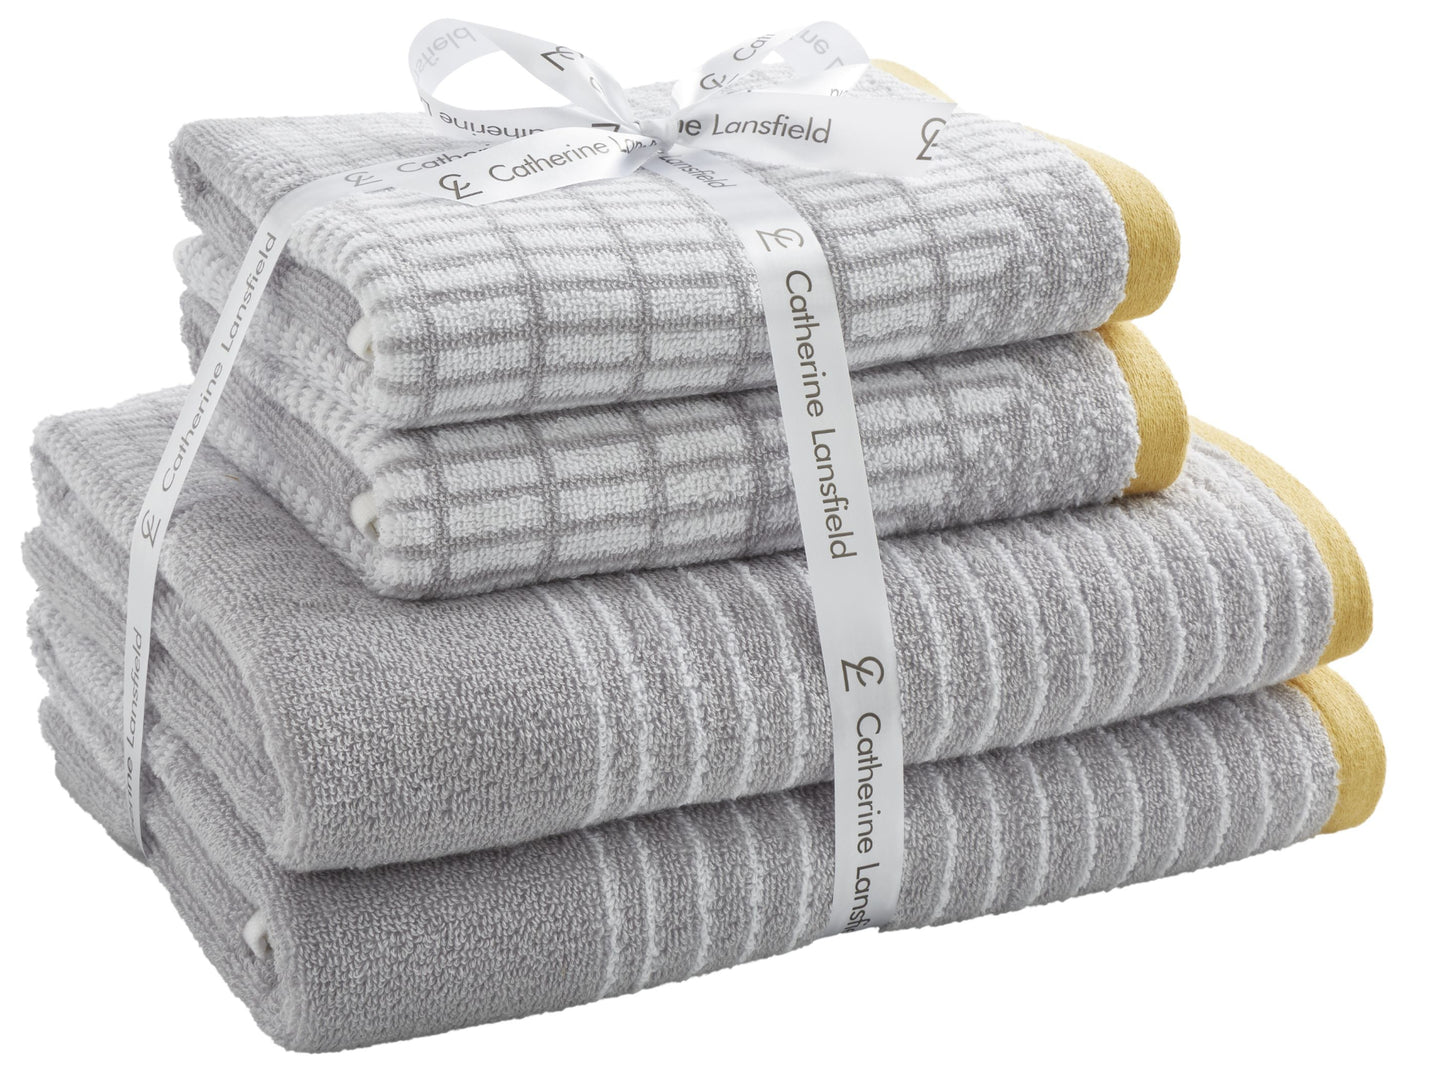 Catherine Lansfield Larsson Geo 100% Cotton Towels in Grey/Ochre